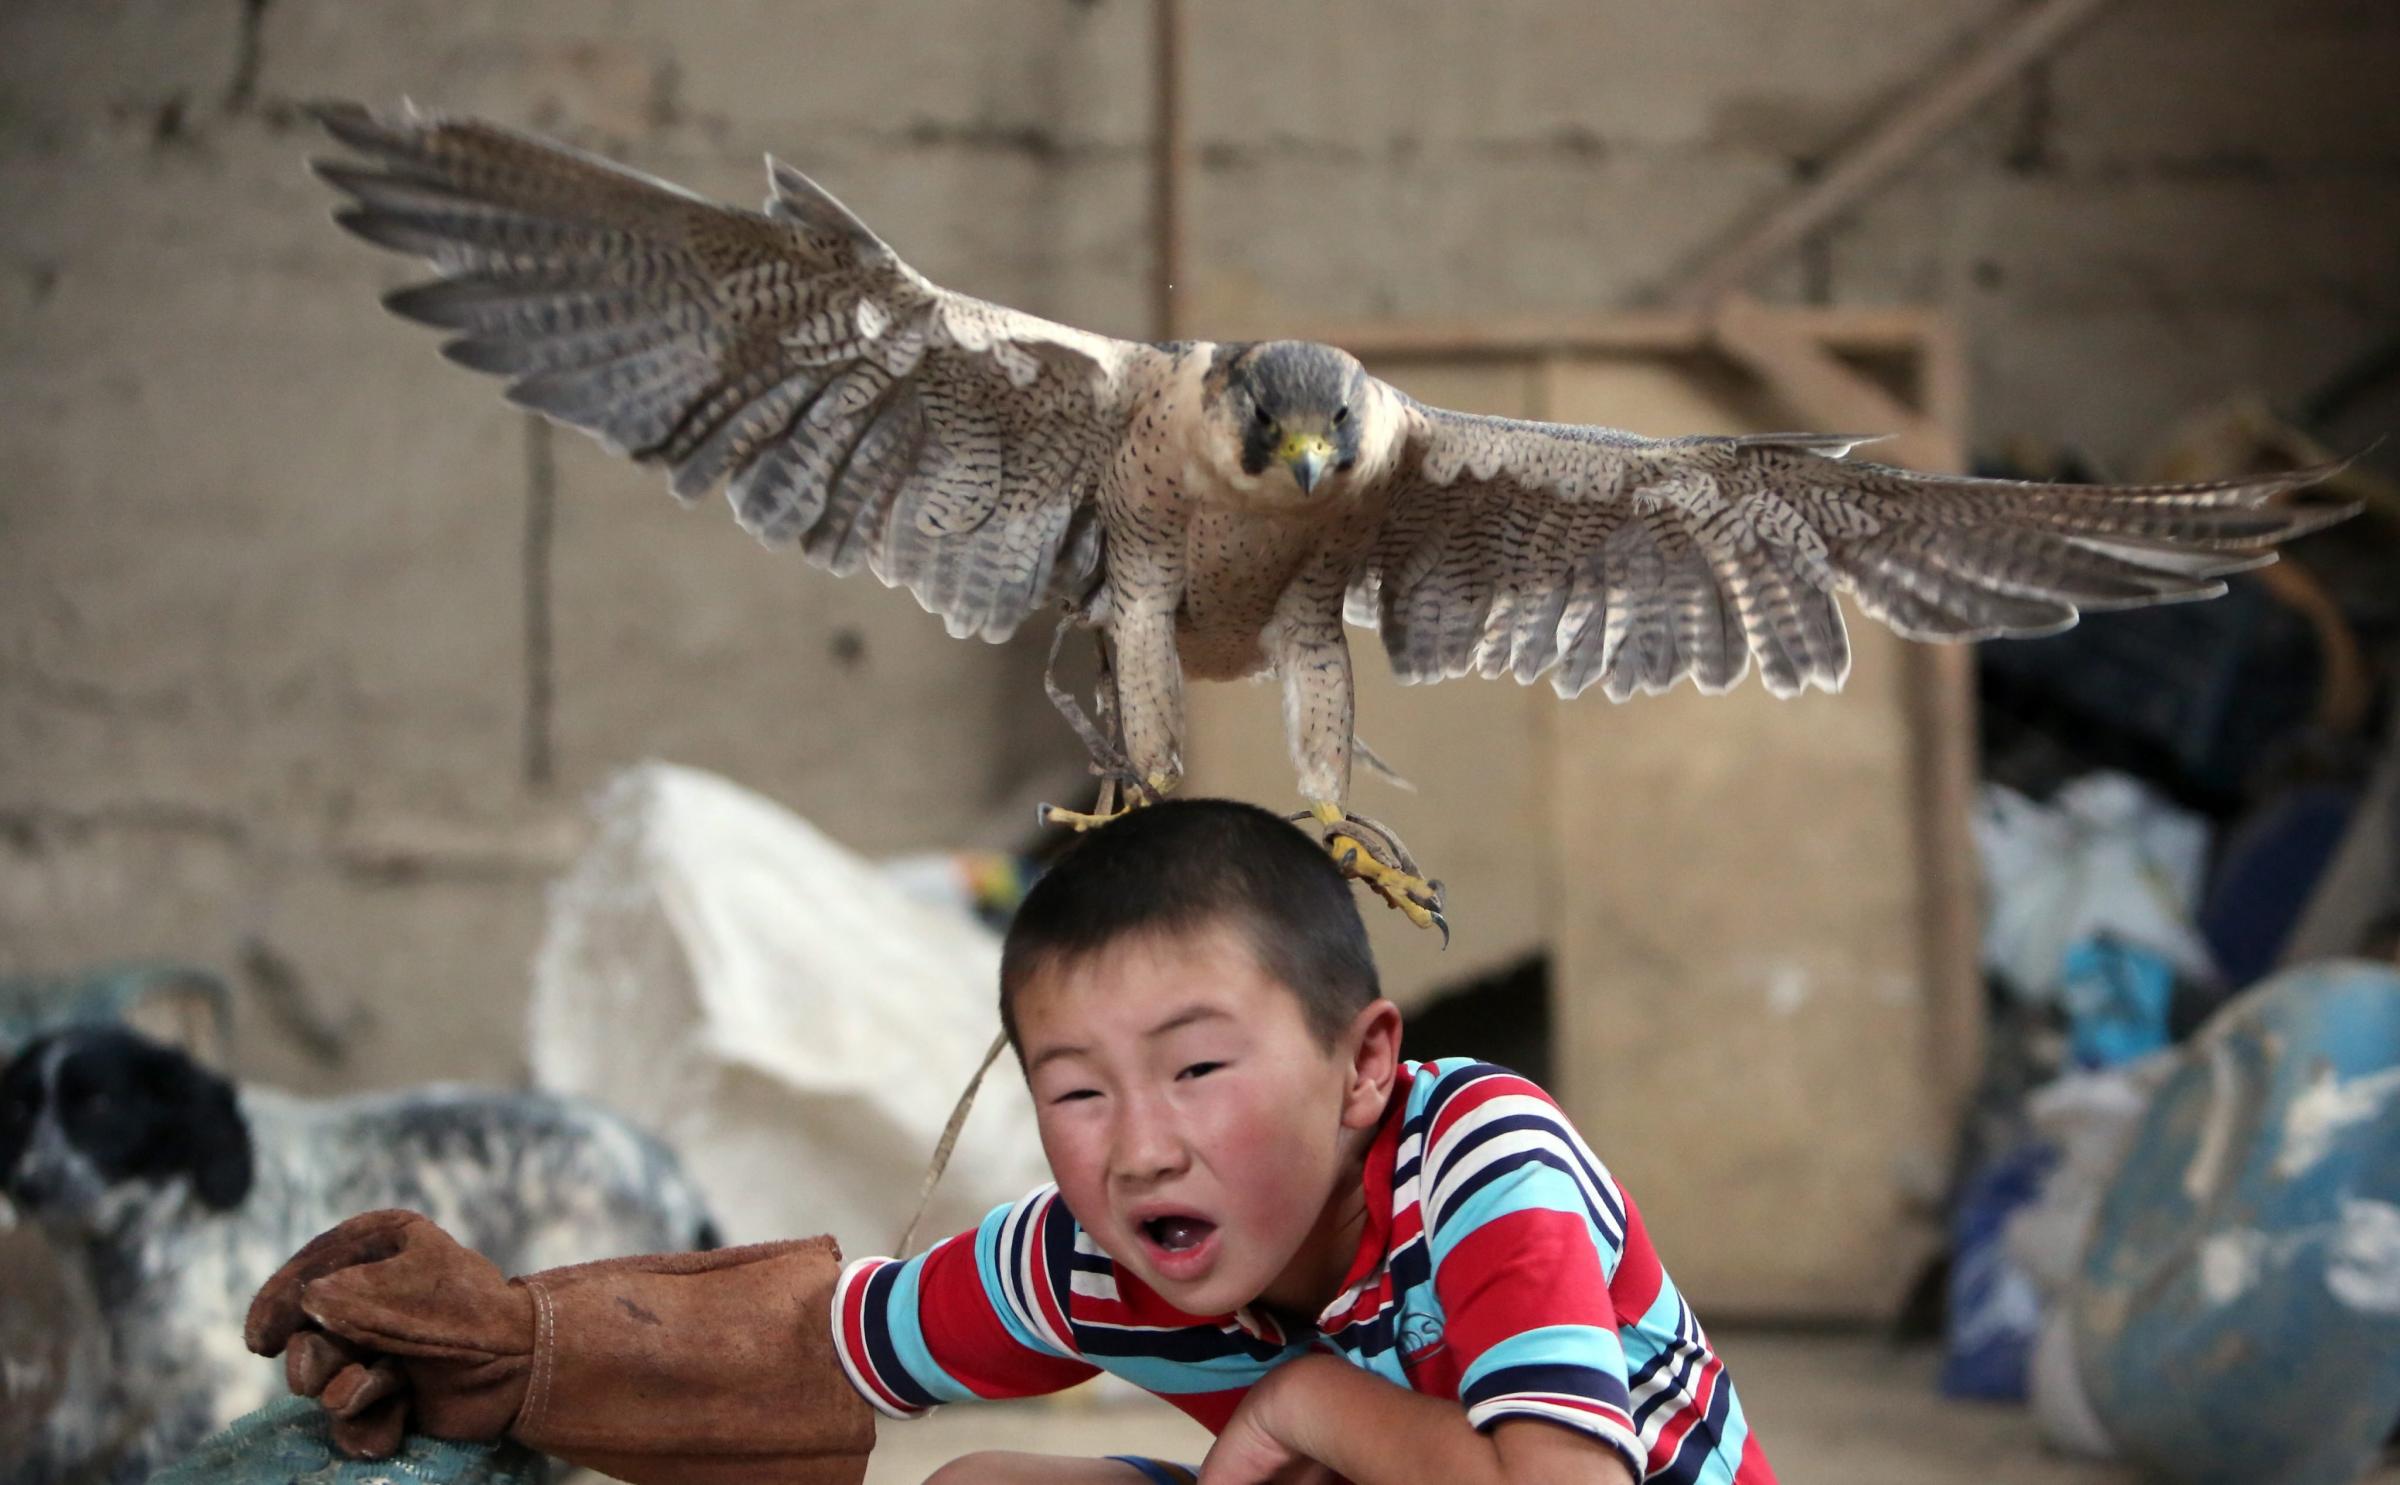 Azat Shajbyrov reacts with a baby falcon on his head in the village of Bokonbaevo, Issyk-Kul area, Kyrgyzstan, on June 22, 2016.